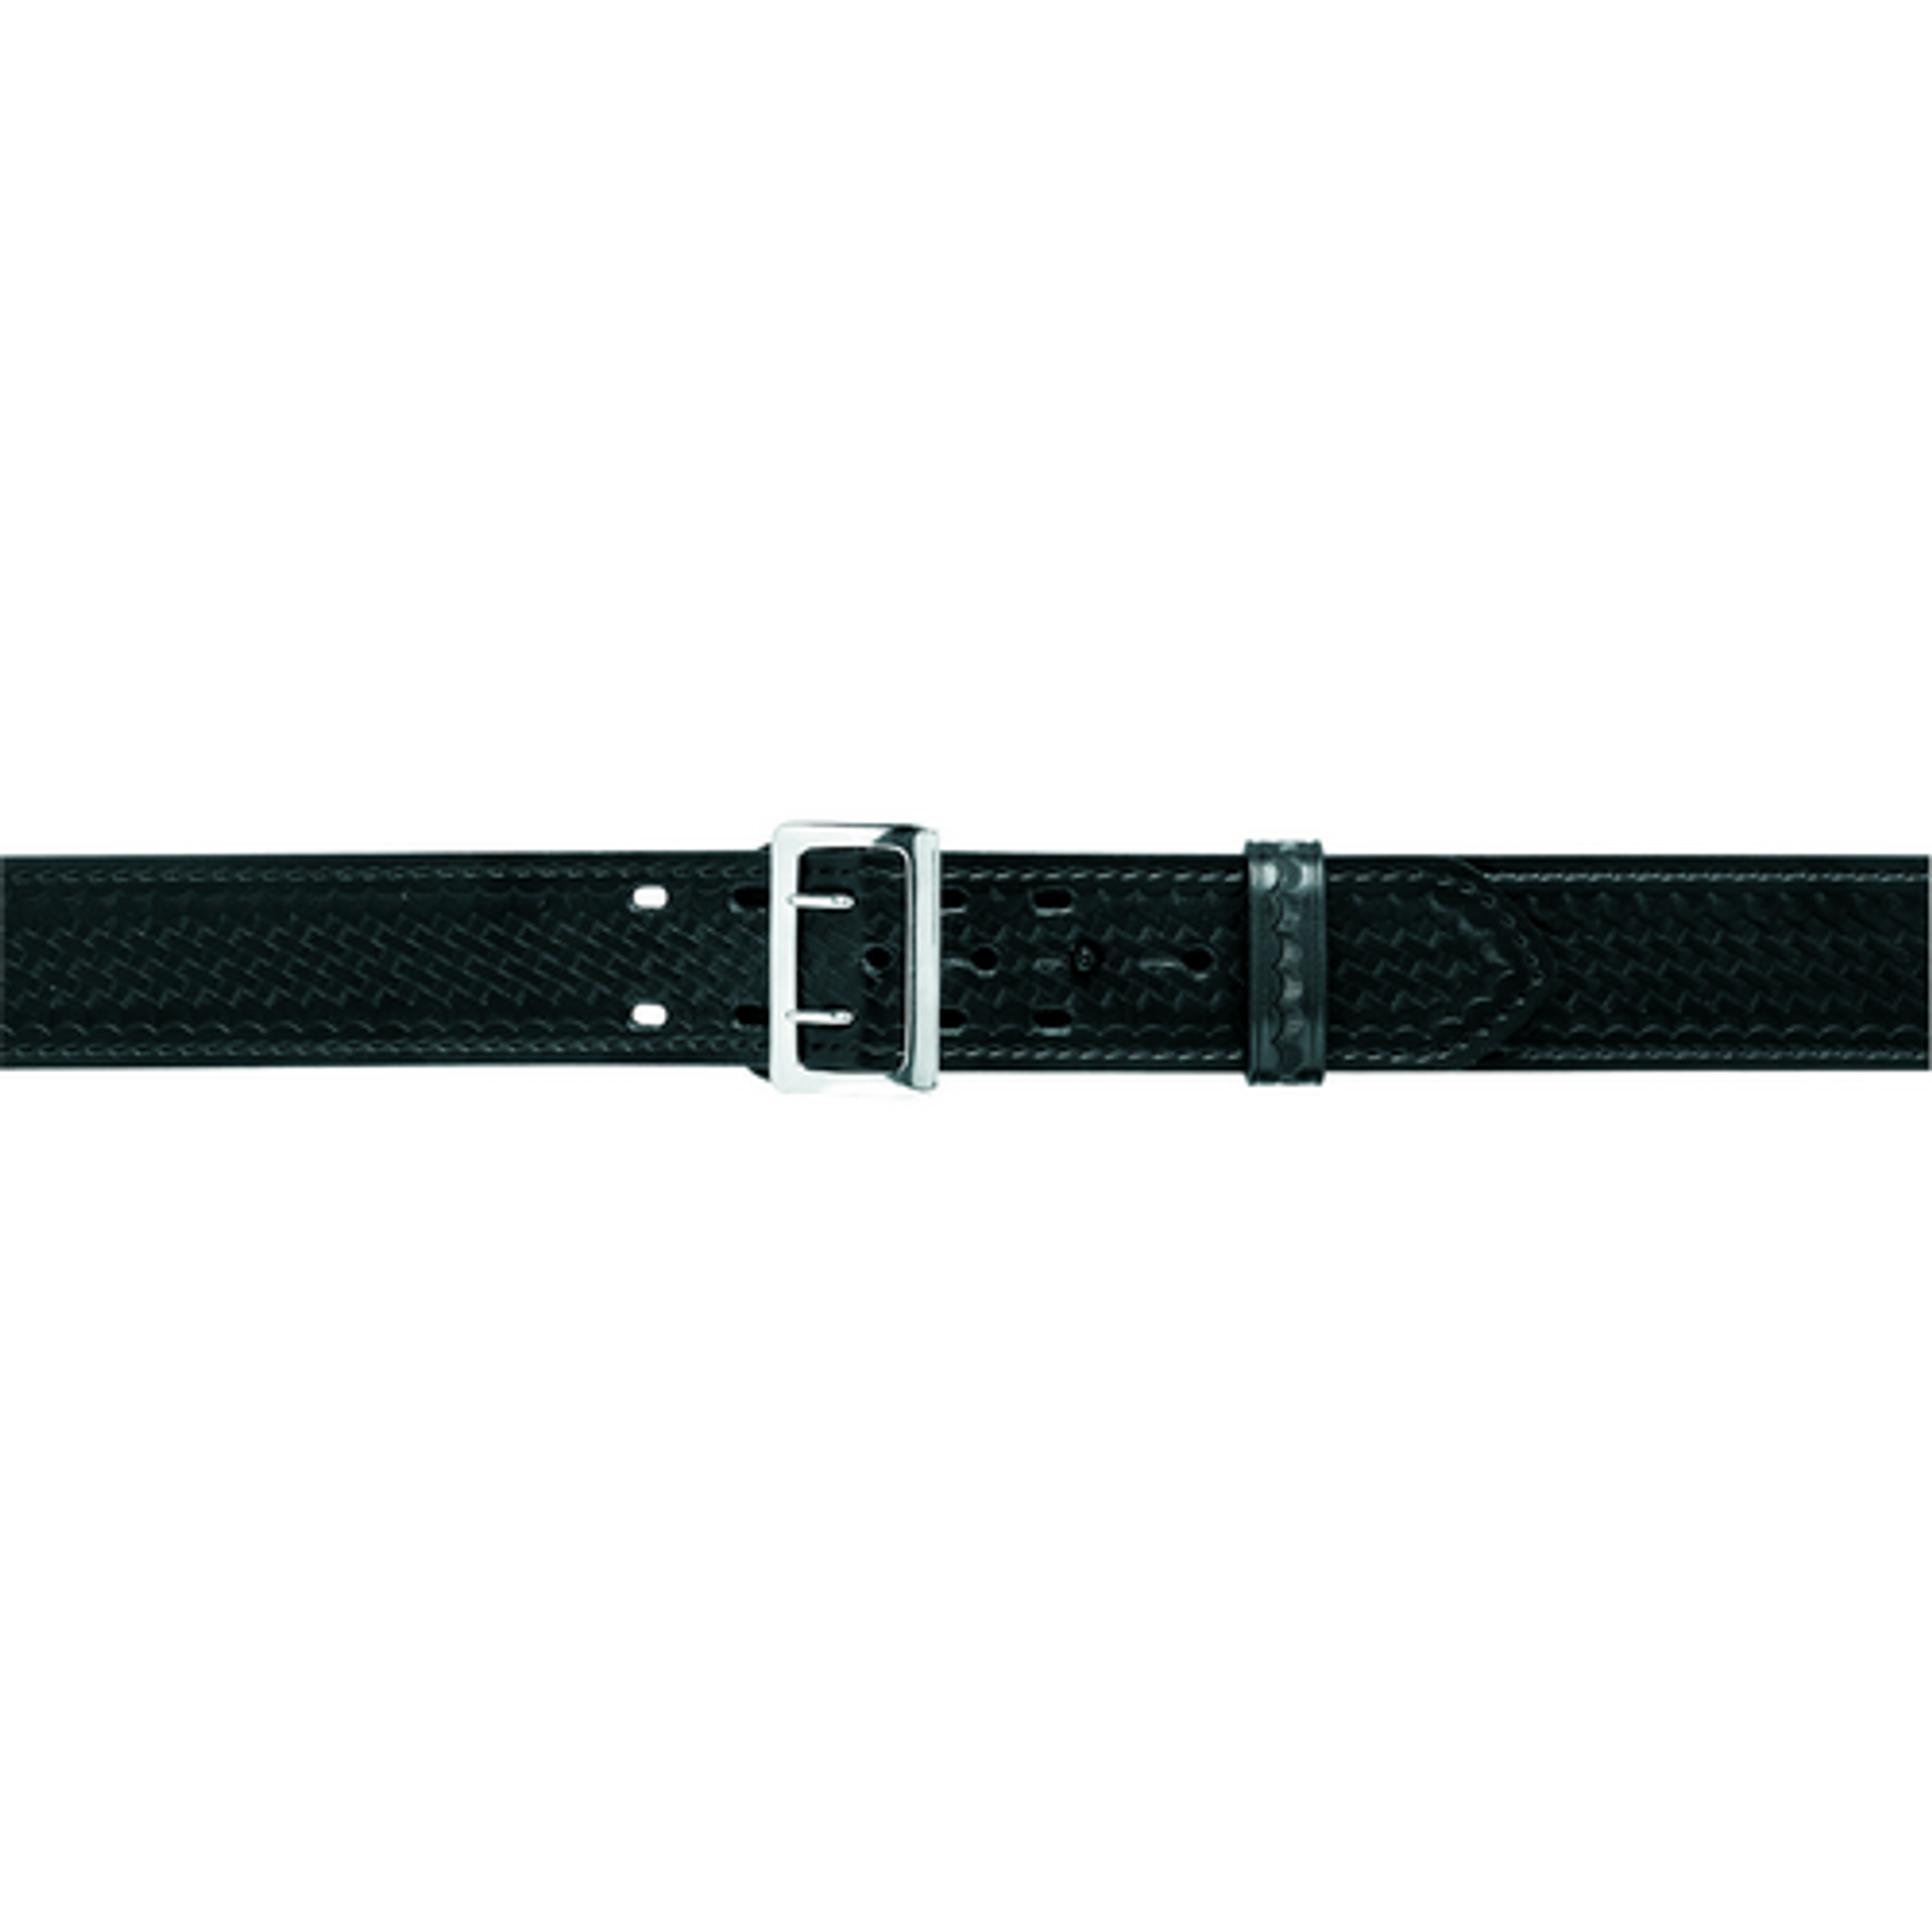 87 - Sam Browne Buckled Duty Belt, 2.25 (58mm) - KR87-42-6B